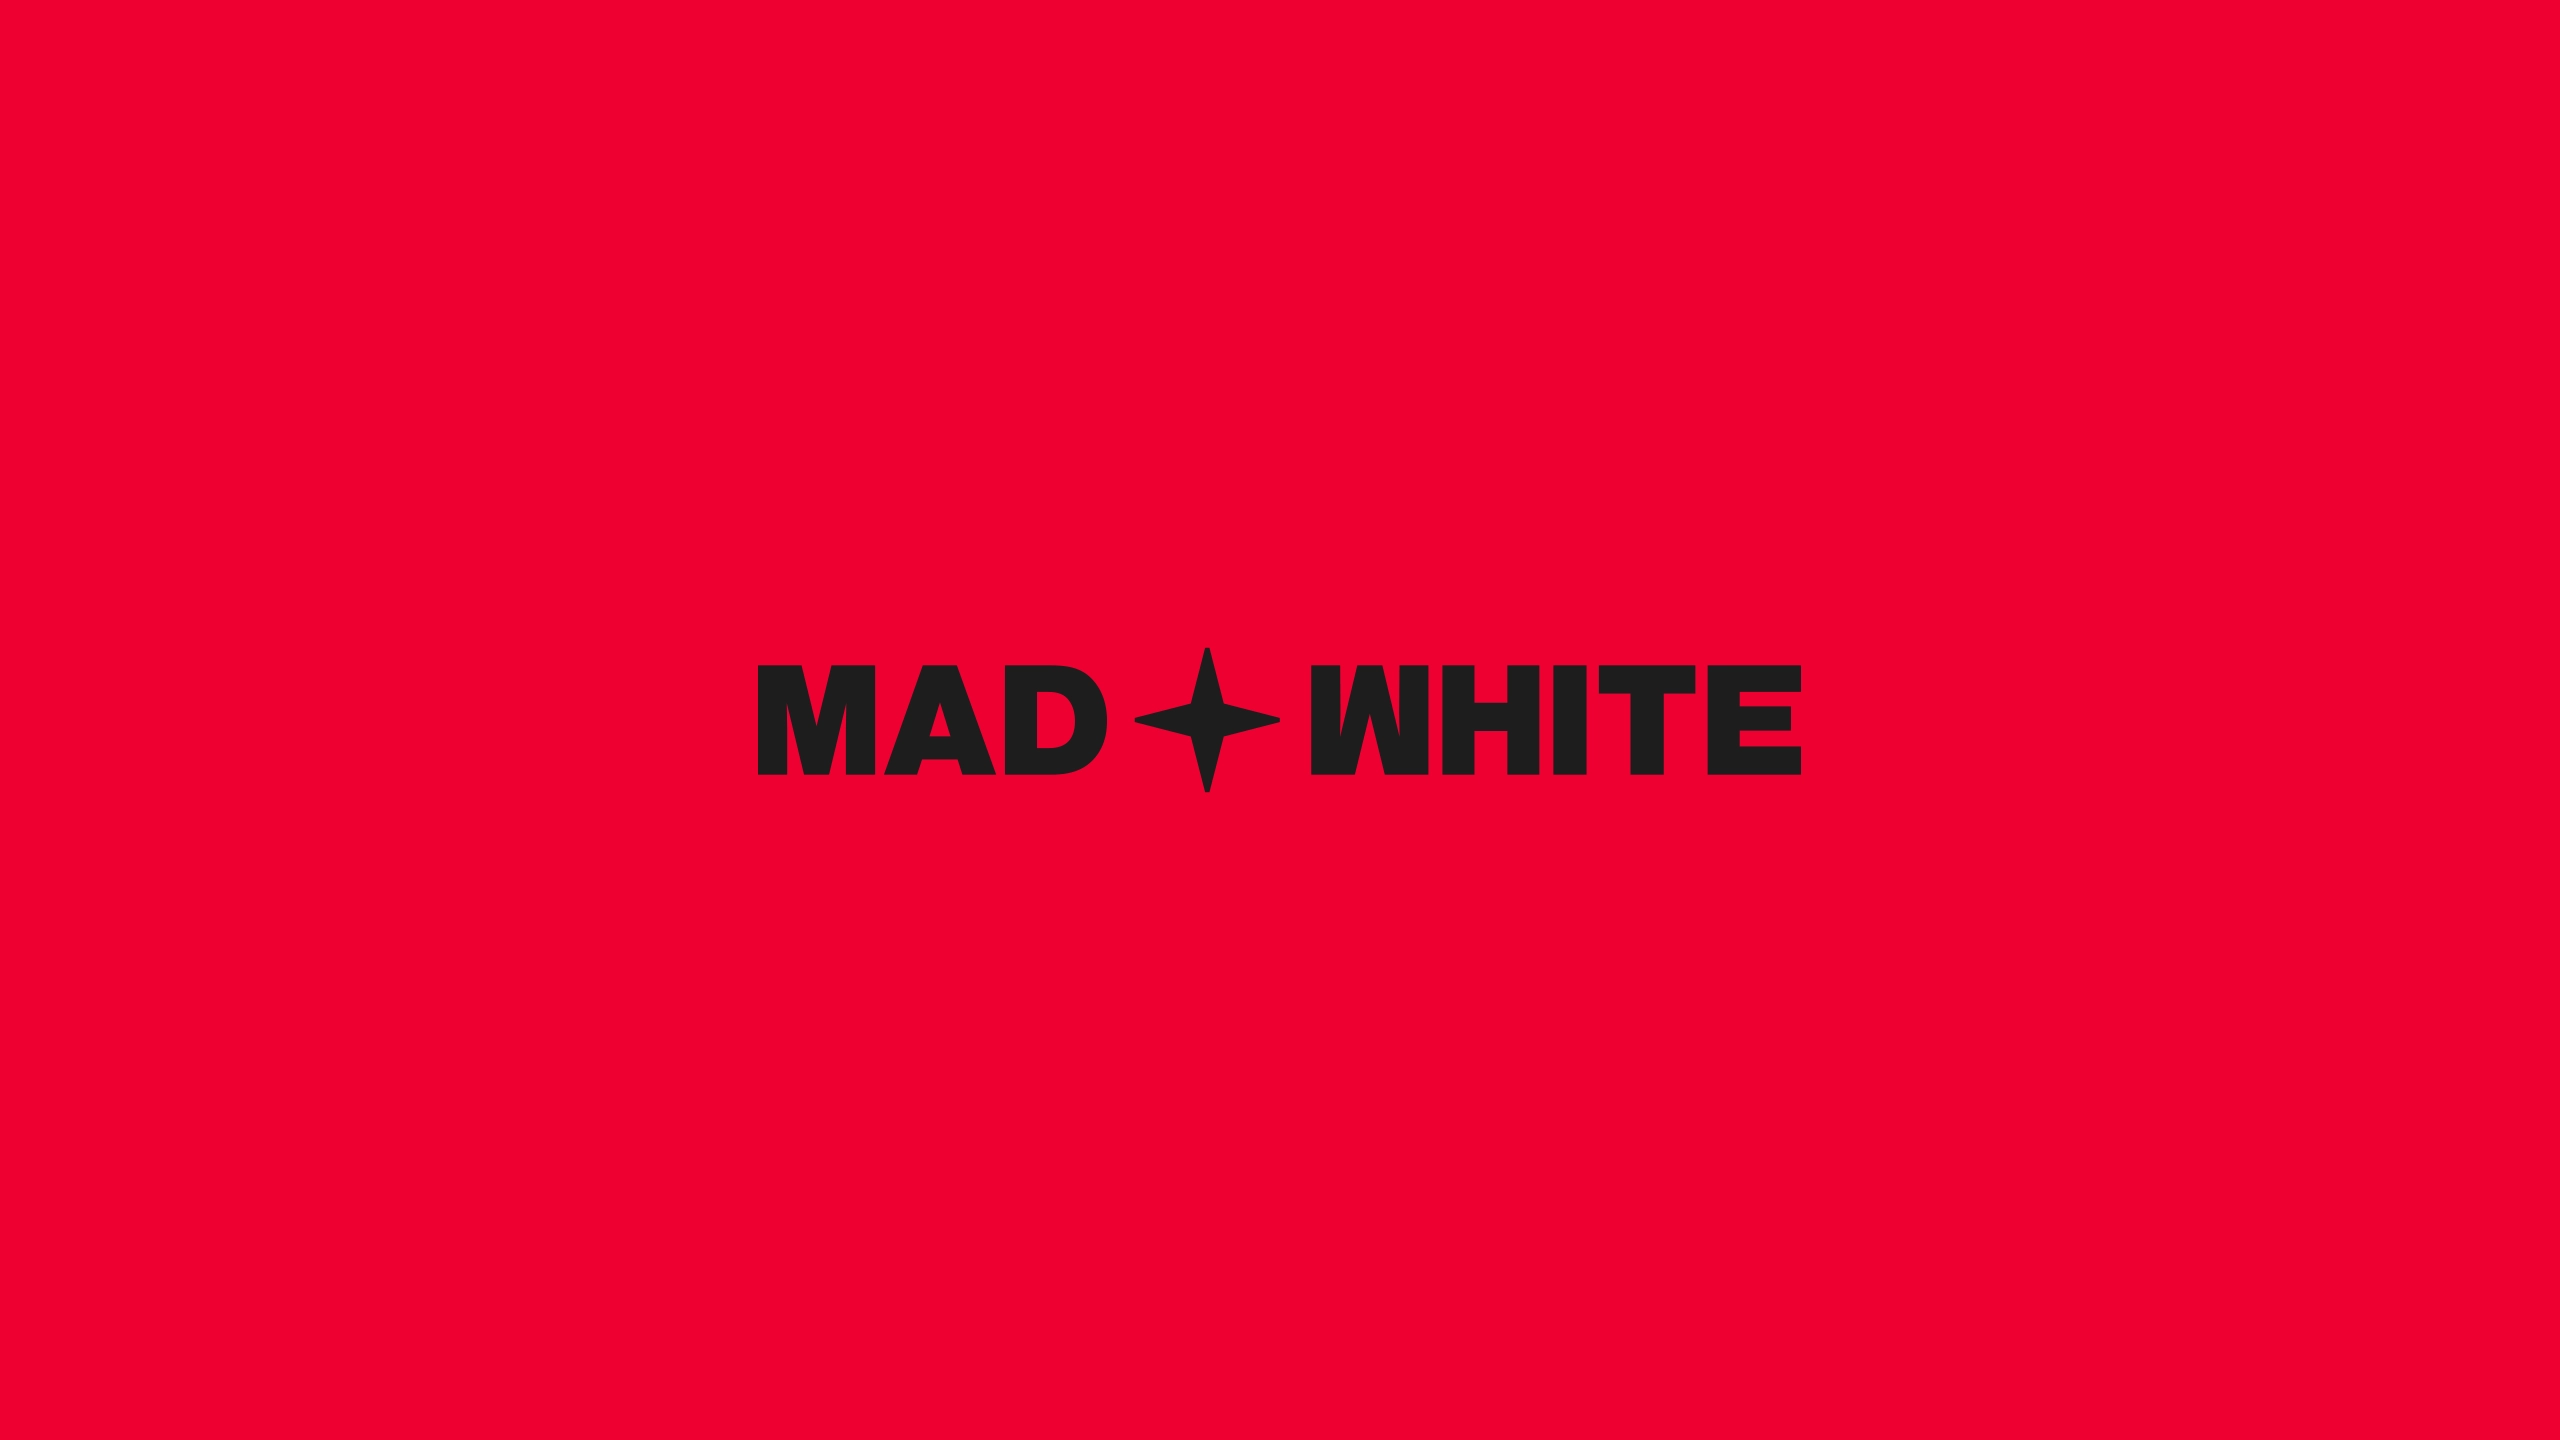 Studio-Hrastar-Mad-White-02